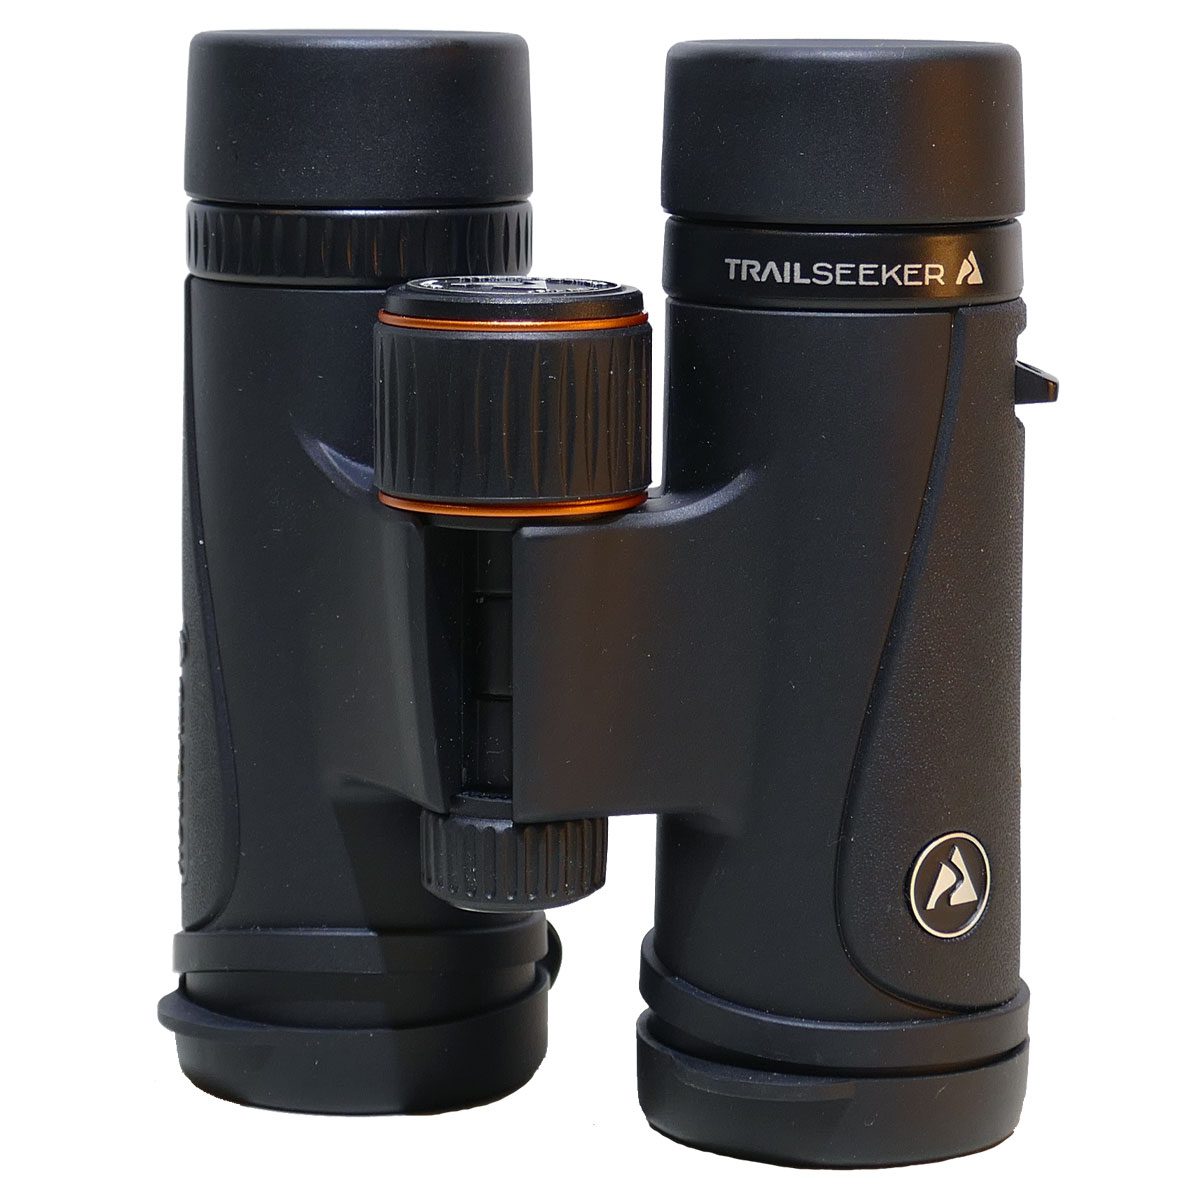 black binoculars with orange detail